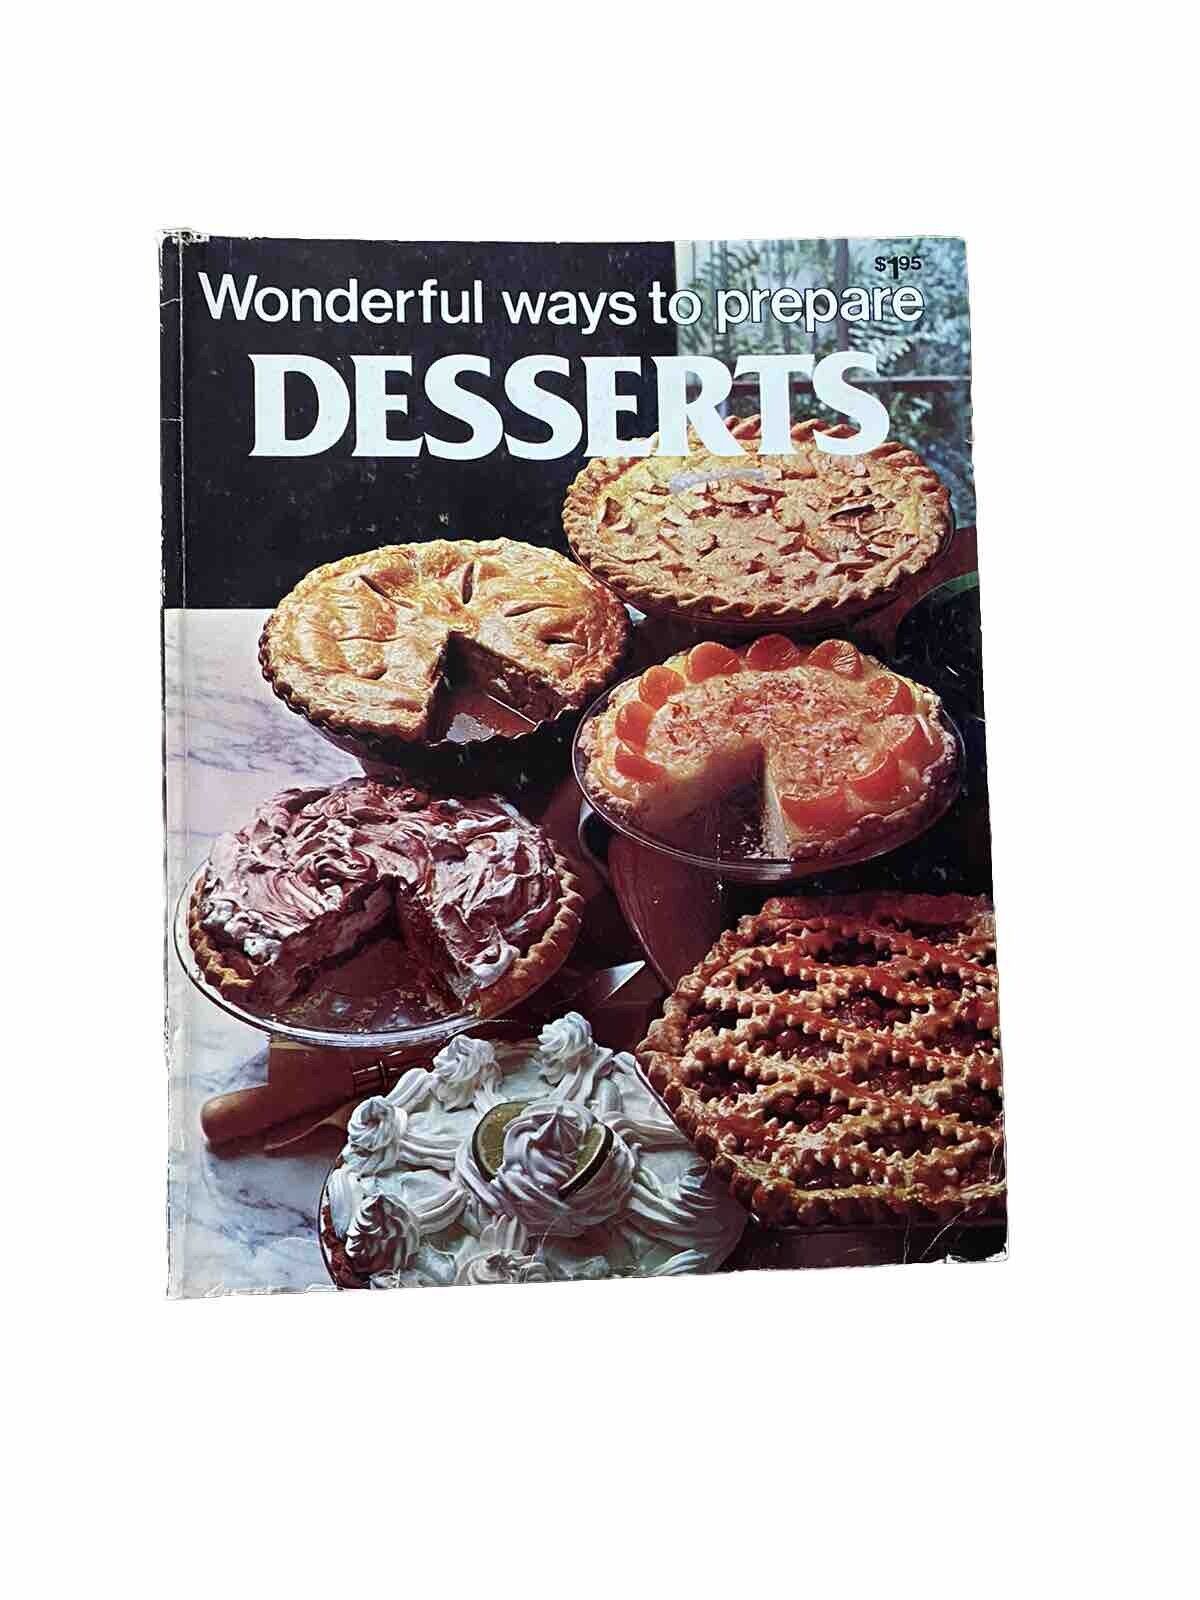 Wonderful Ways to Prepare DESSERTS by Jo Ann Shirley (1978 paperback)